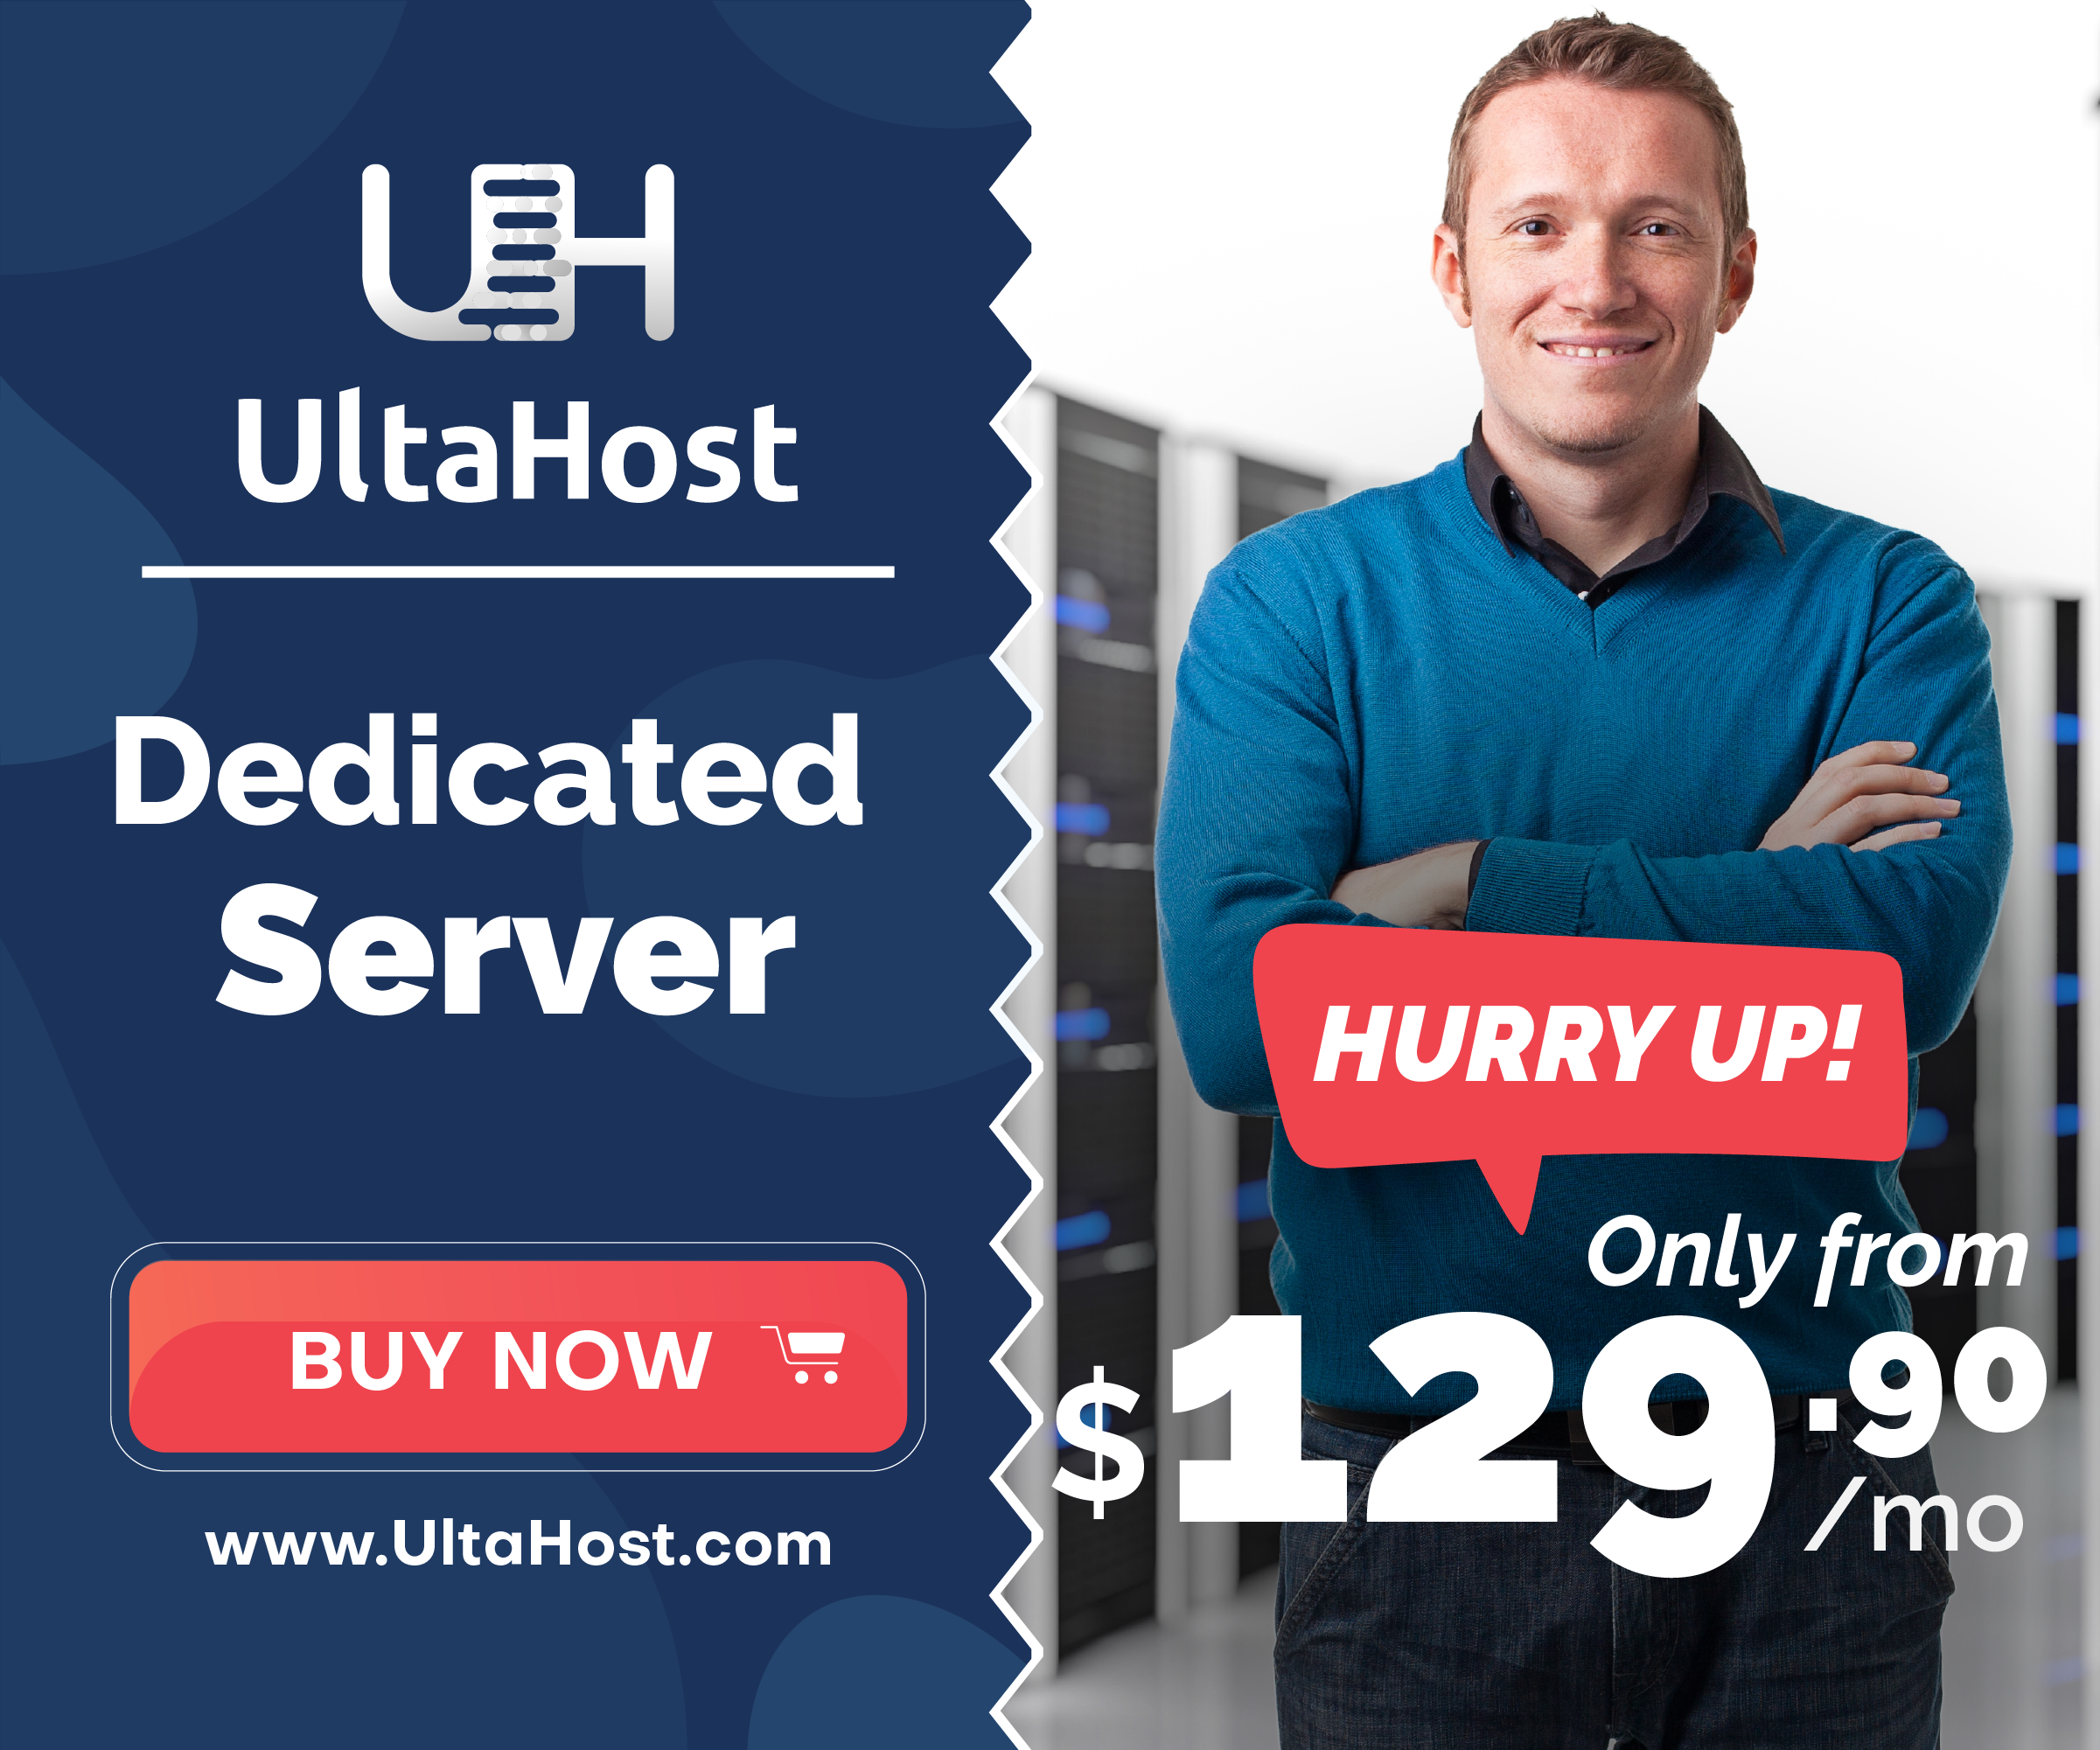 ultahost_cheap_dedicated_hosting_336x280